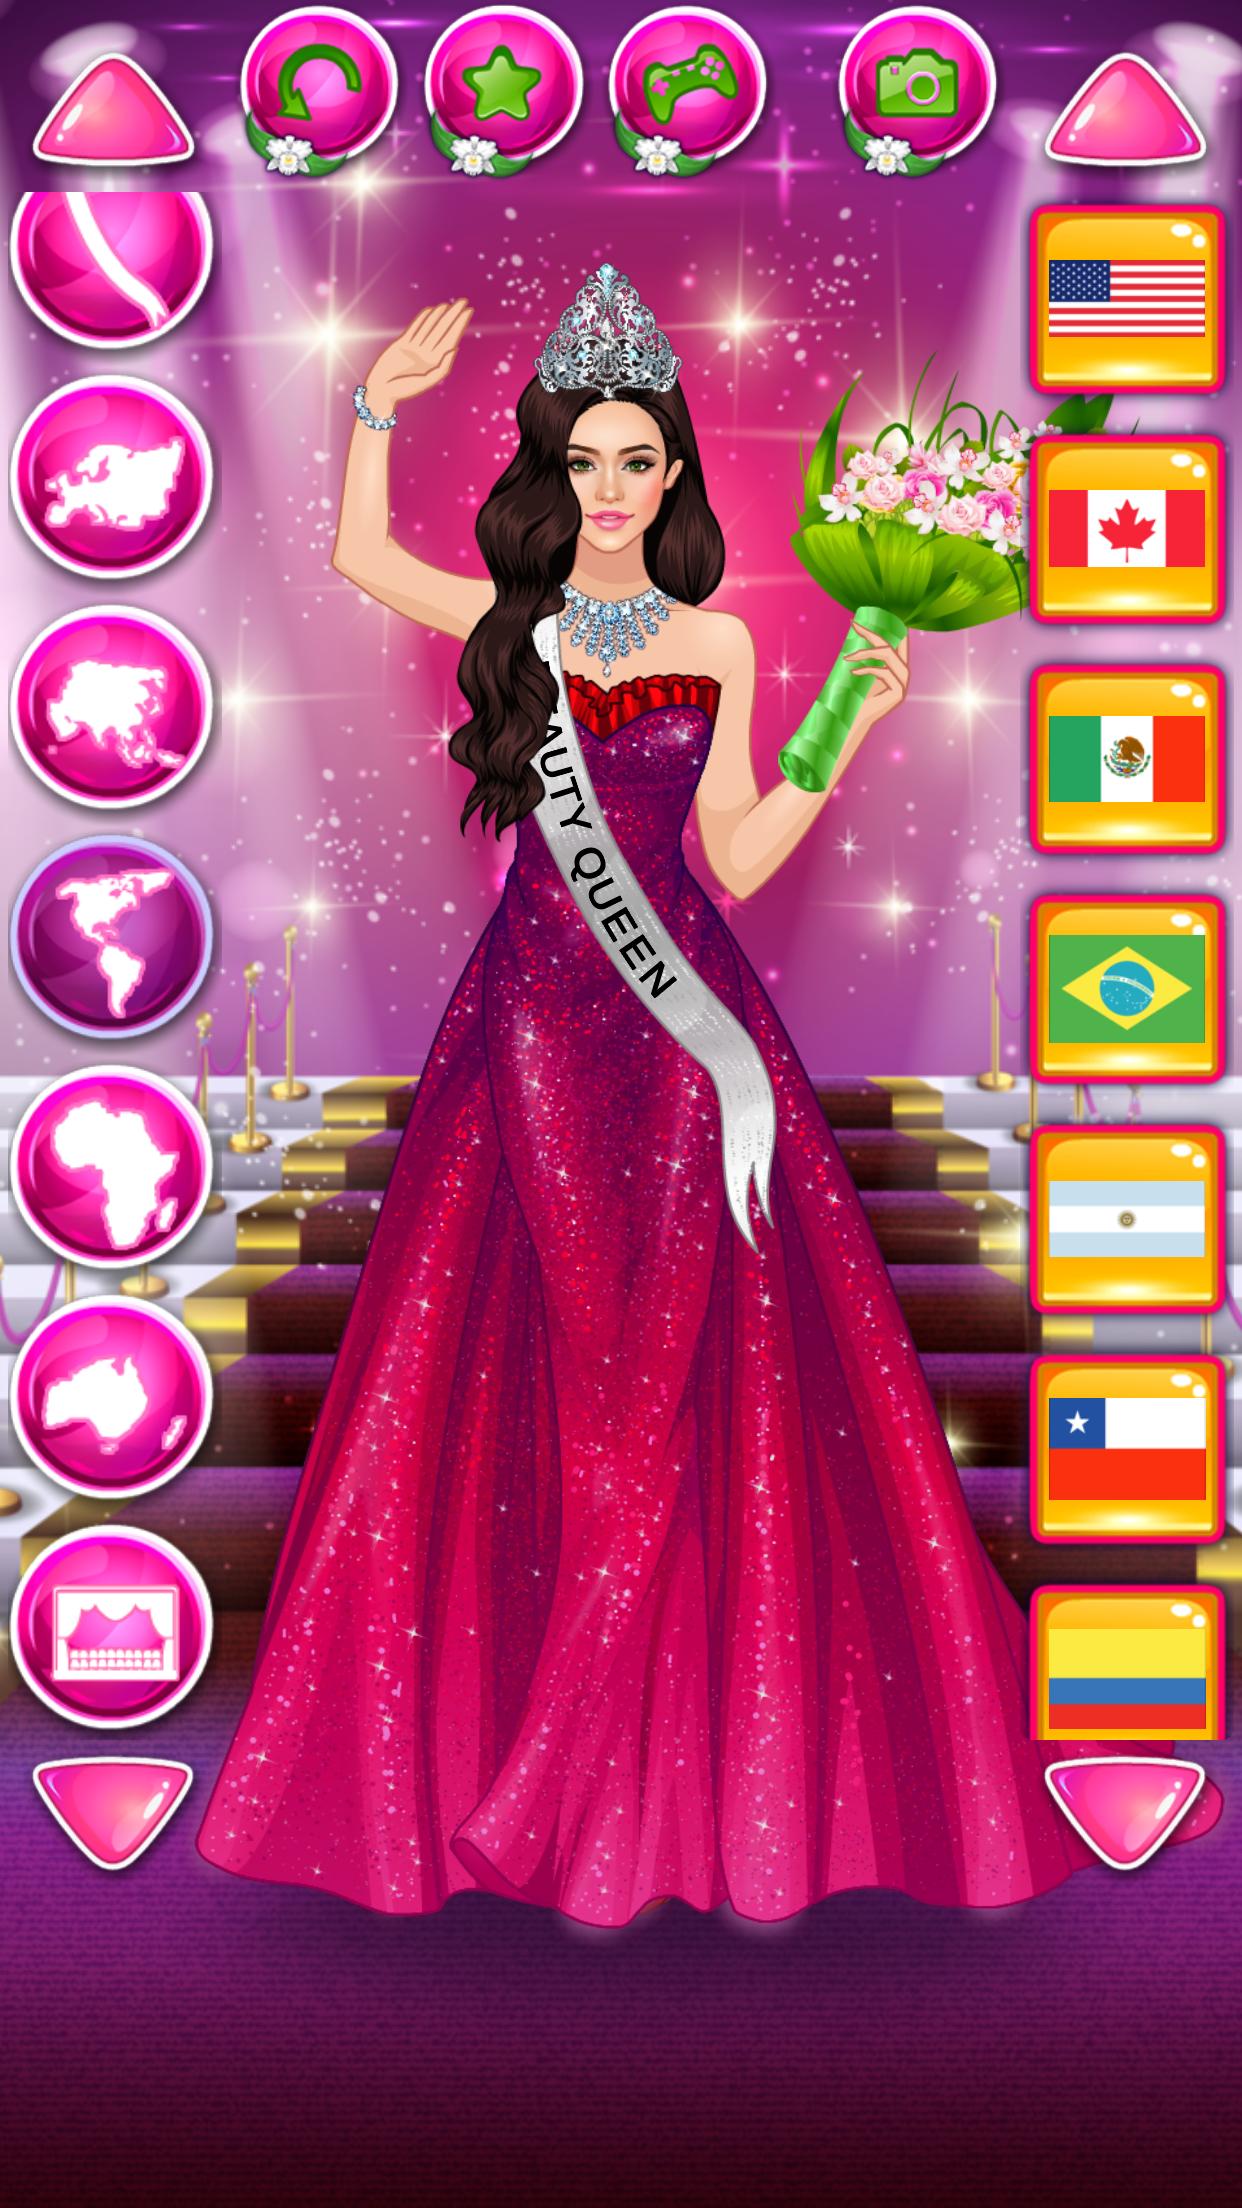 Beauty Queen Dress Up - Star Girl Fashion 1.1 Screenshot 22